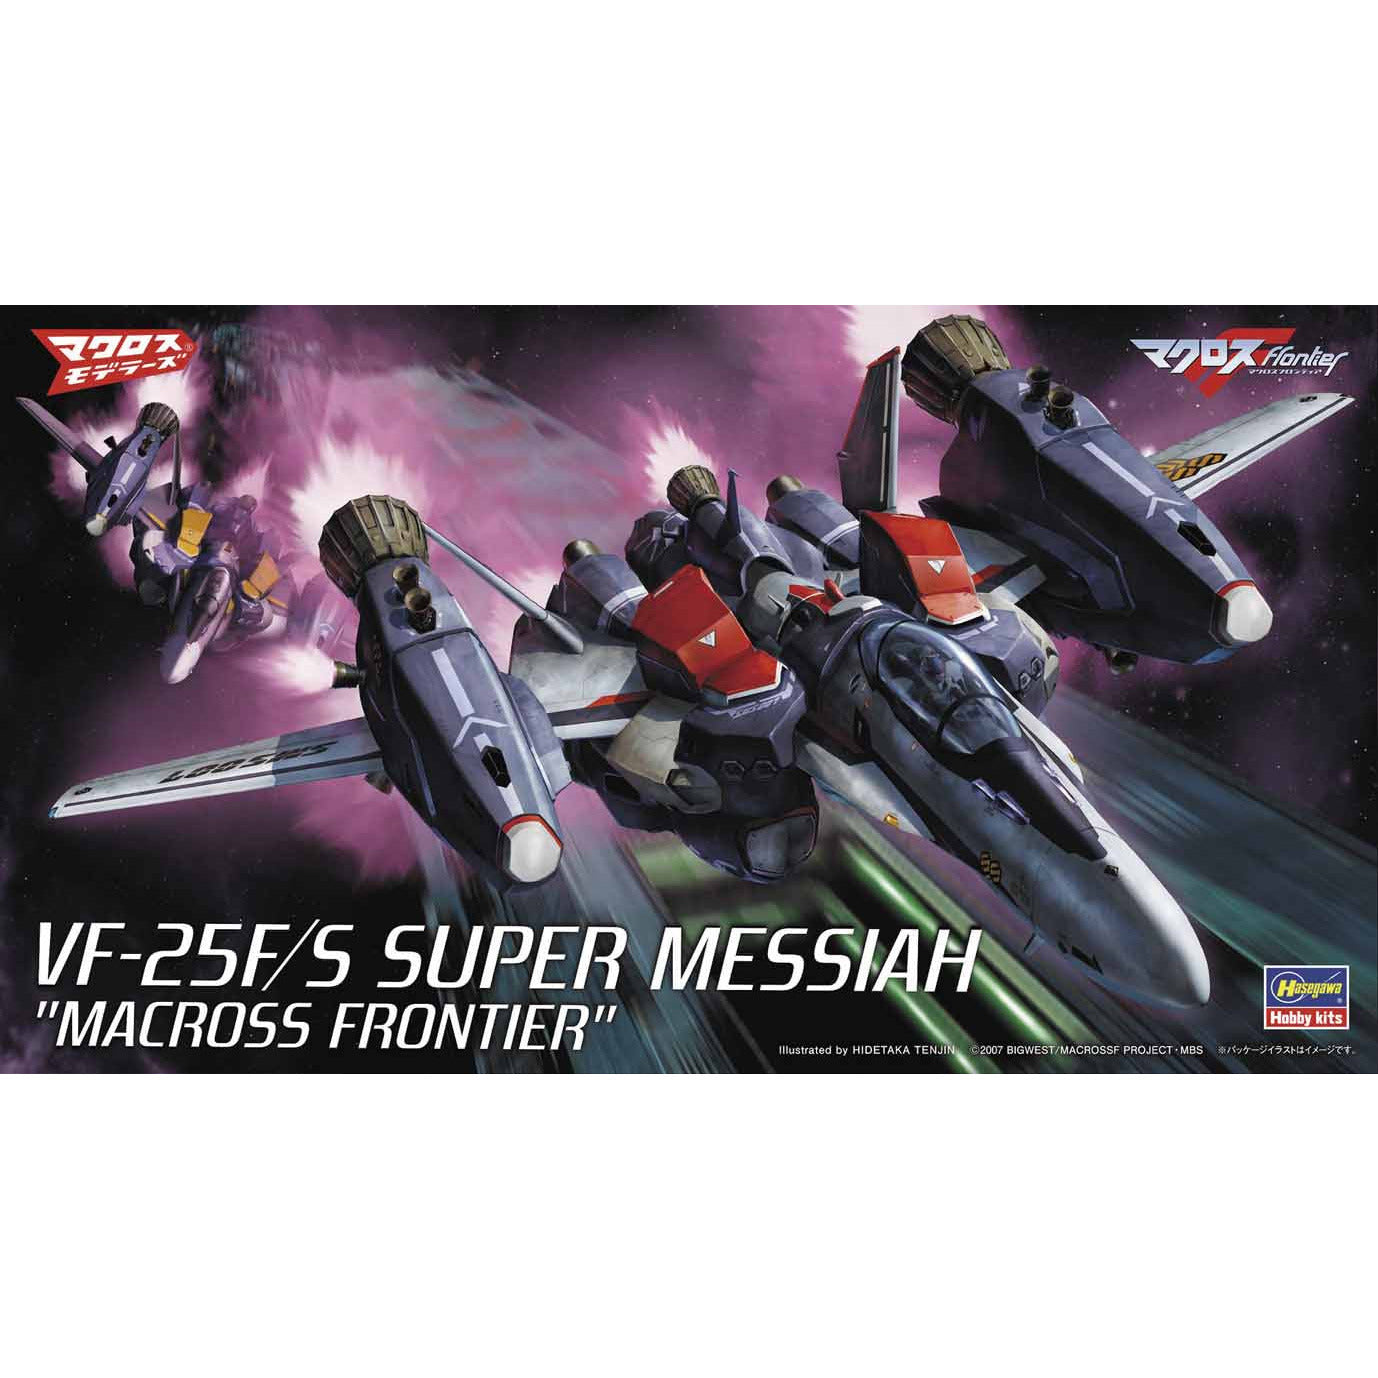 Macross Frontier VF-25F/S Super Messiah 1/72 #65727 by Hasegawa